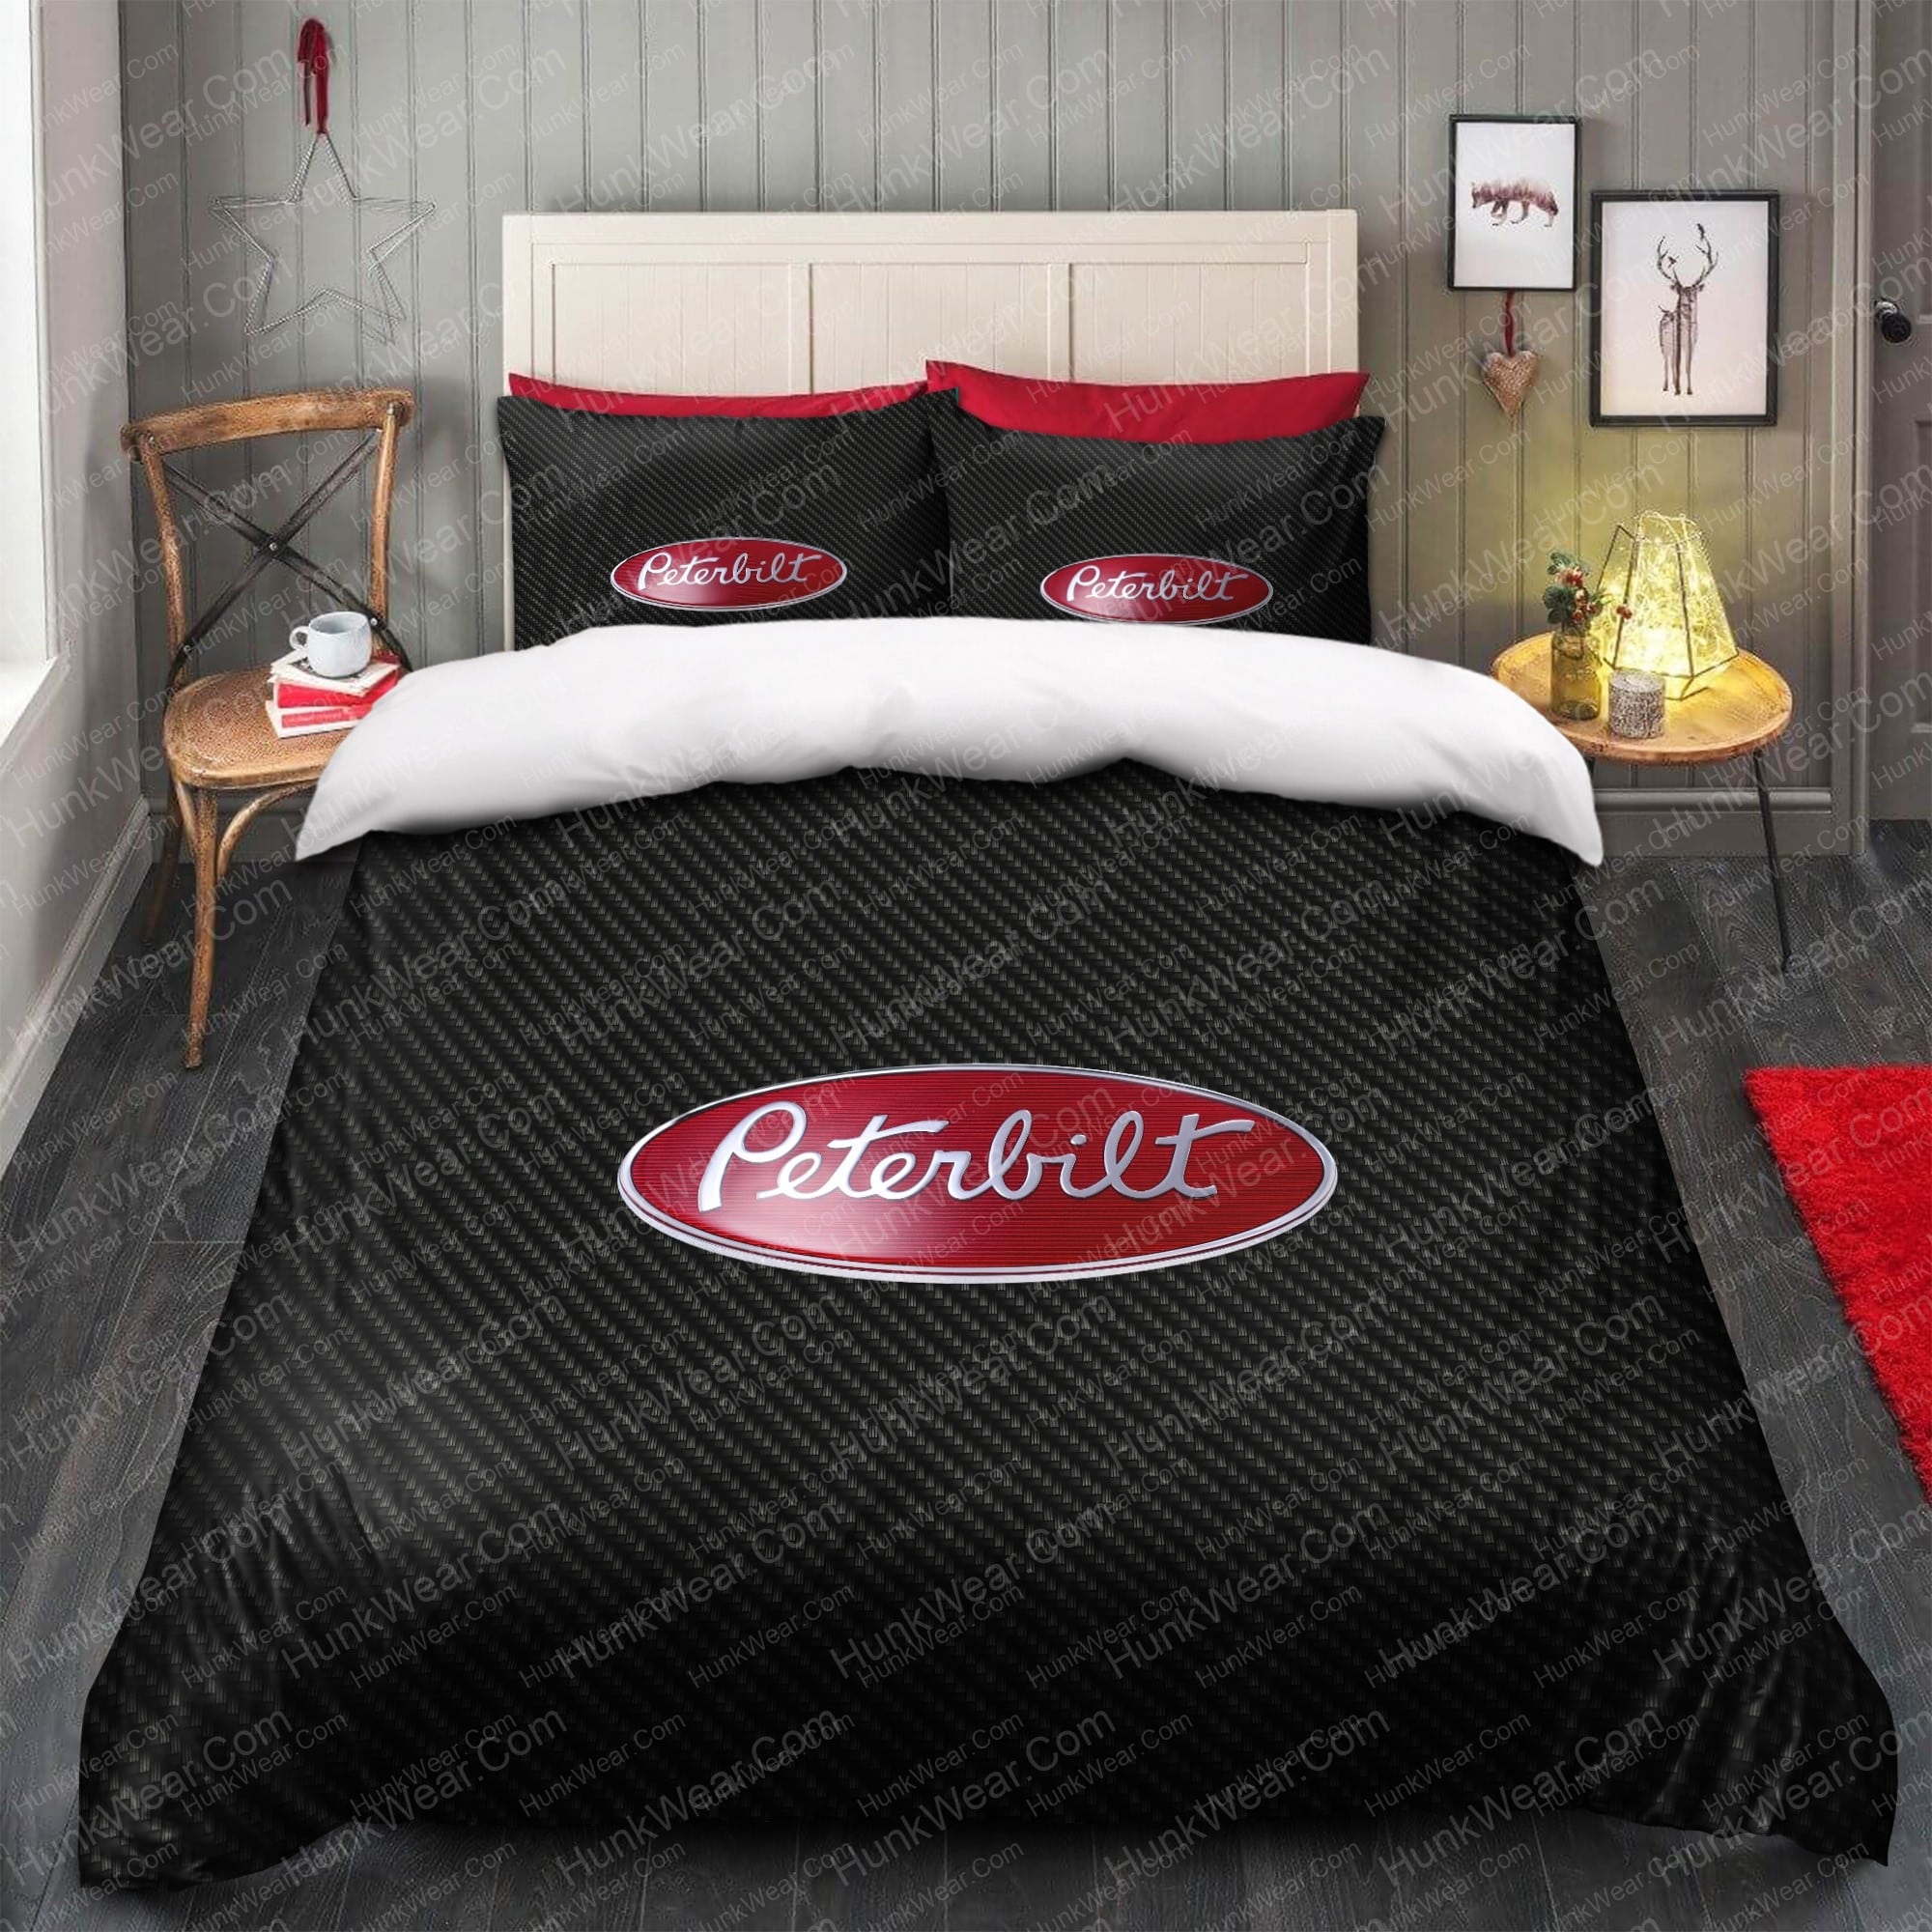 peterbilt bed set bedding set 1